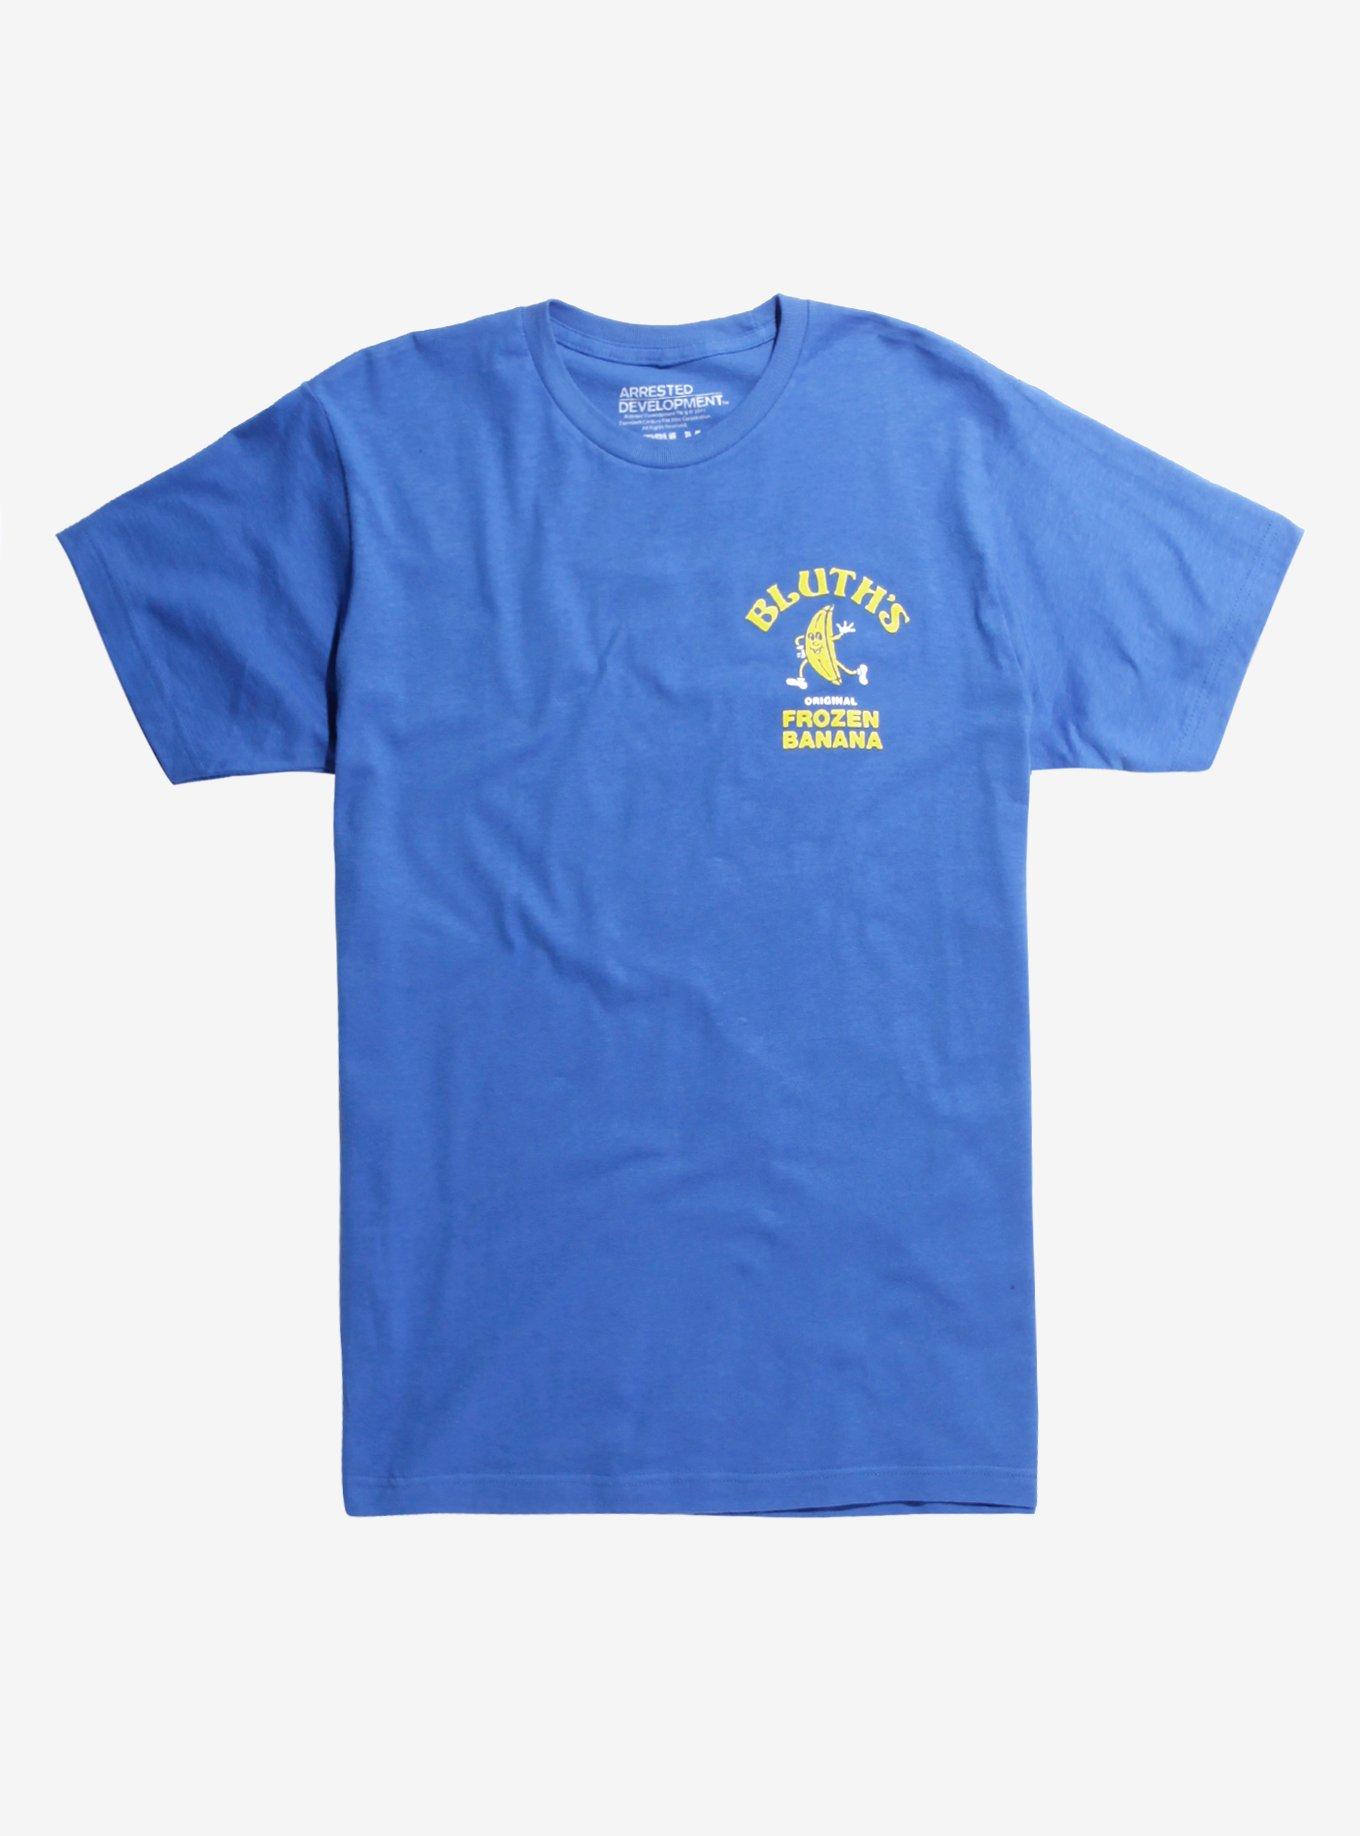 Arrested Development Bluth's Banana Stand T-Shirt, BLUE, hi-res